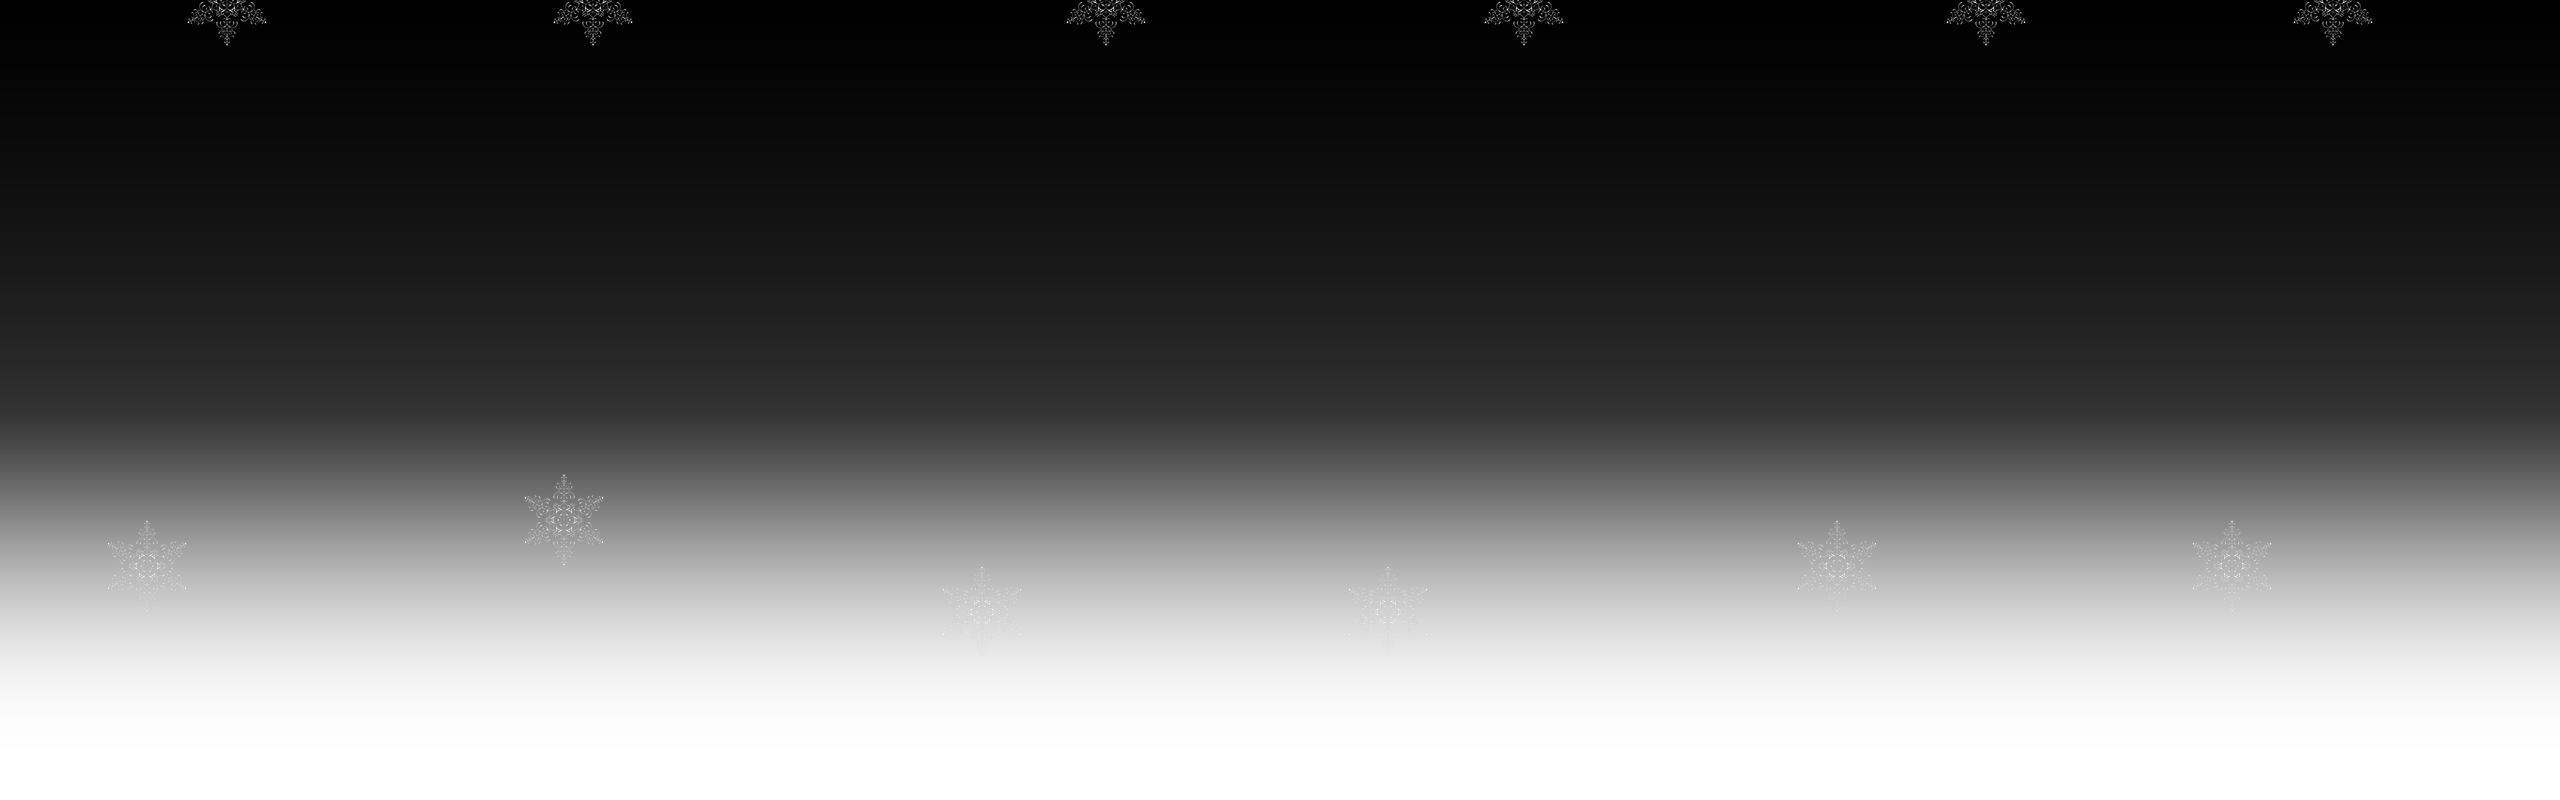 Snow Crystals-Snow Falling at Night